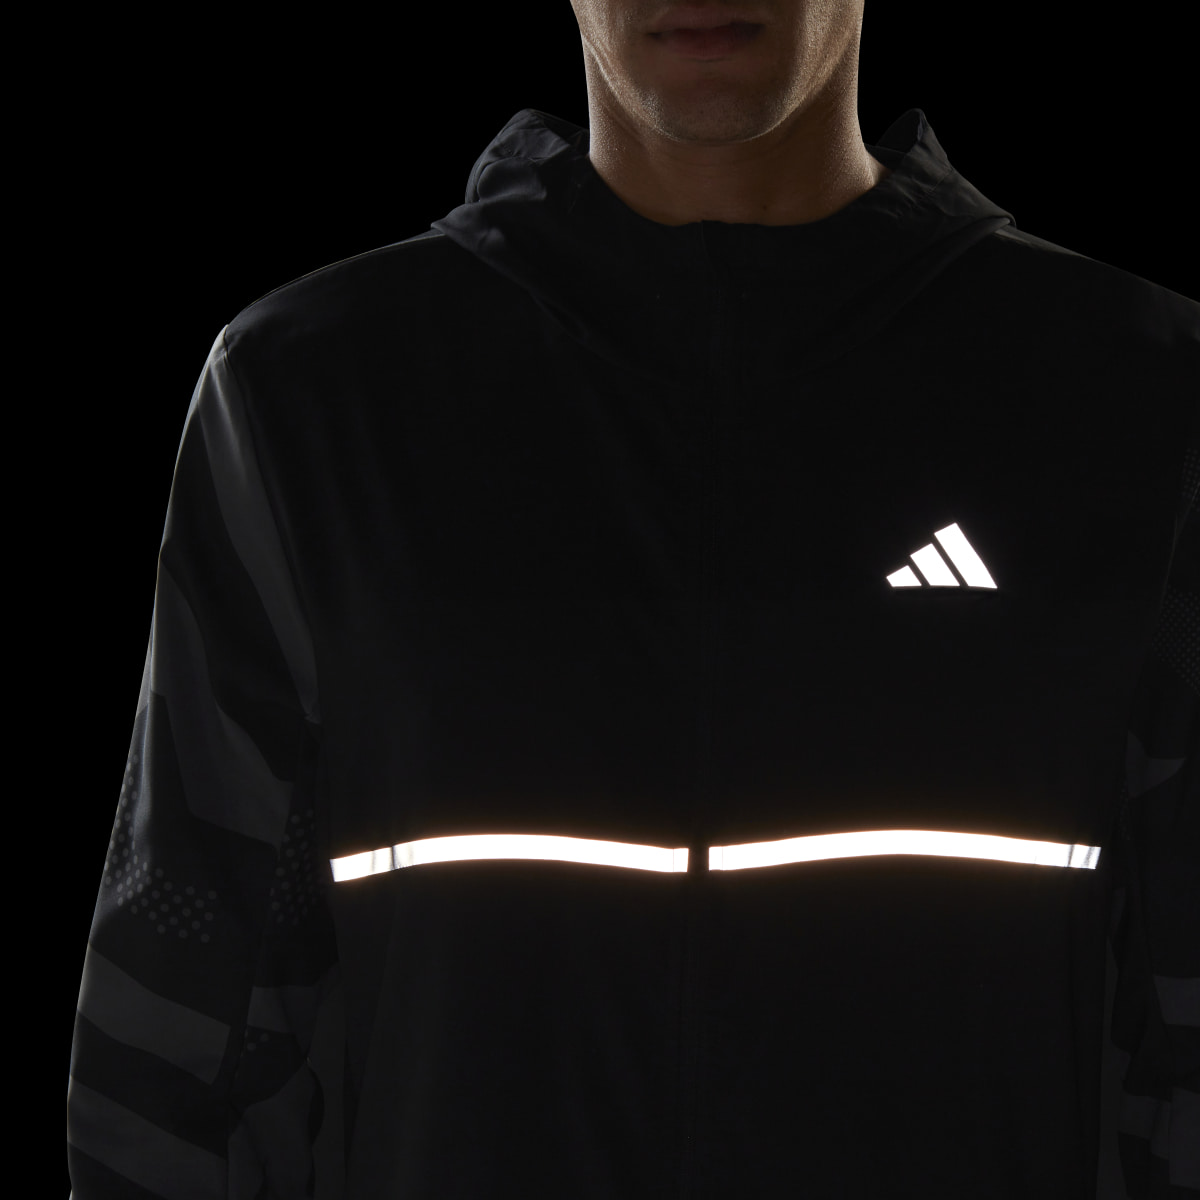 Adidas Own the Run Seasonal Jacket. 8